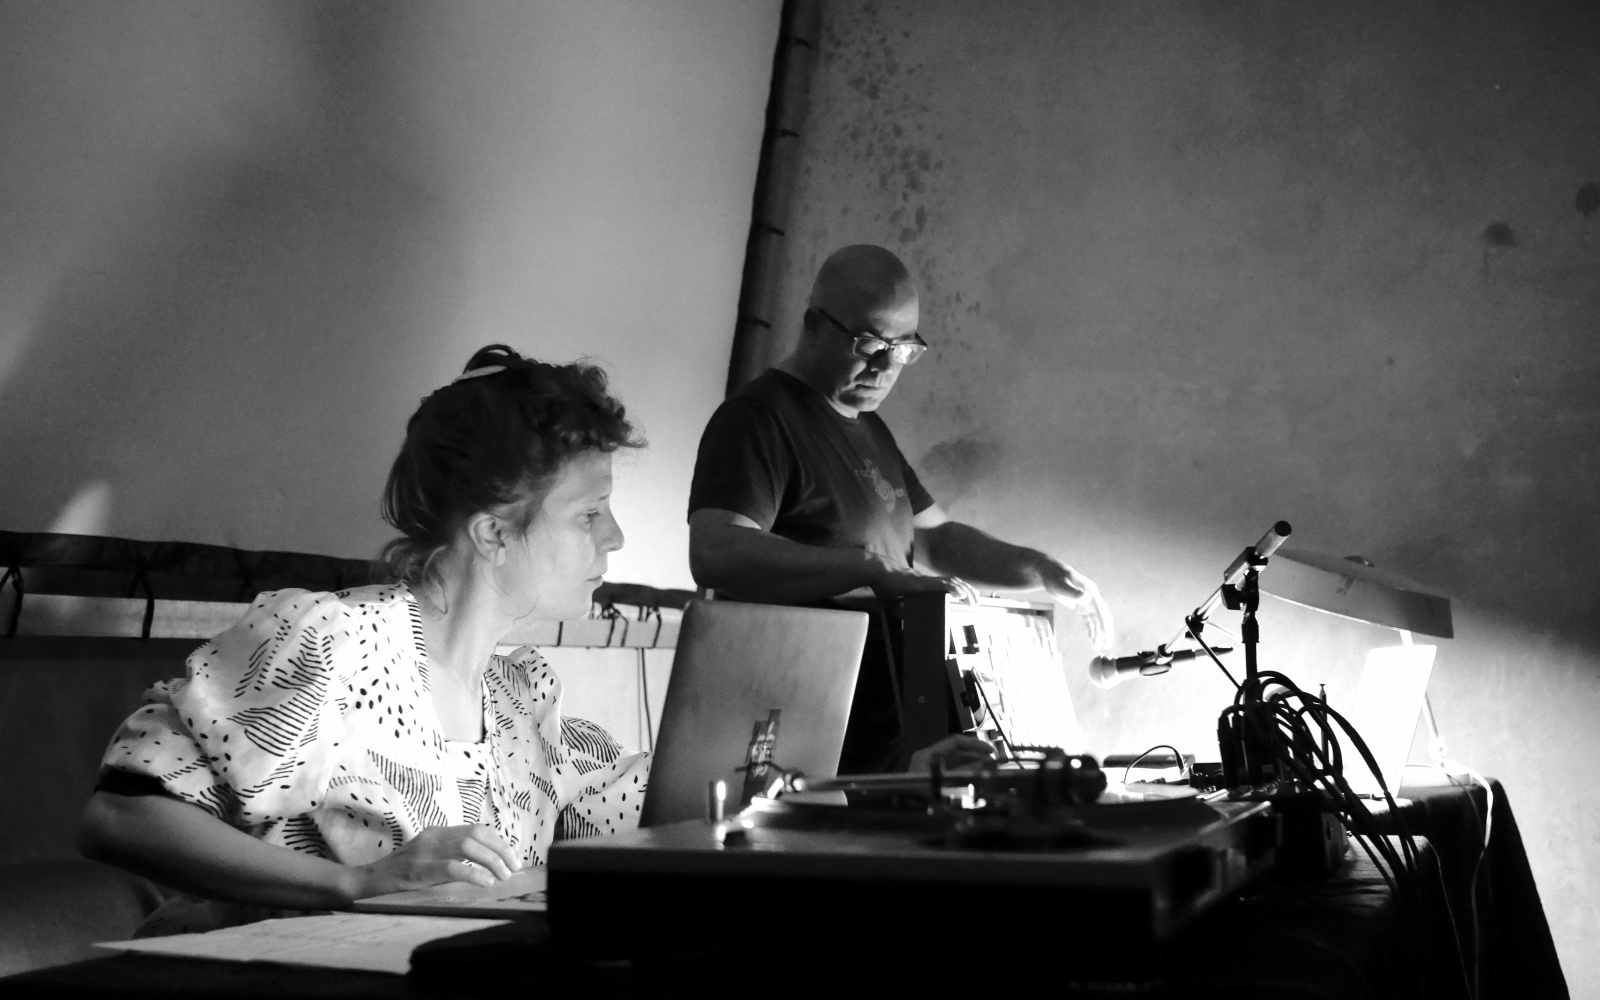 DinahBird und Jean-Philippe Renoult performen "Shruti Loops" im Ausland, Berlin 2016